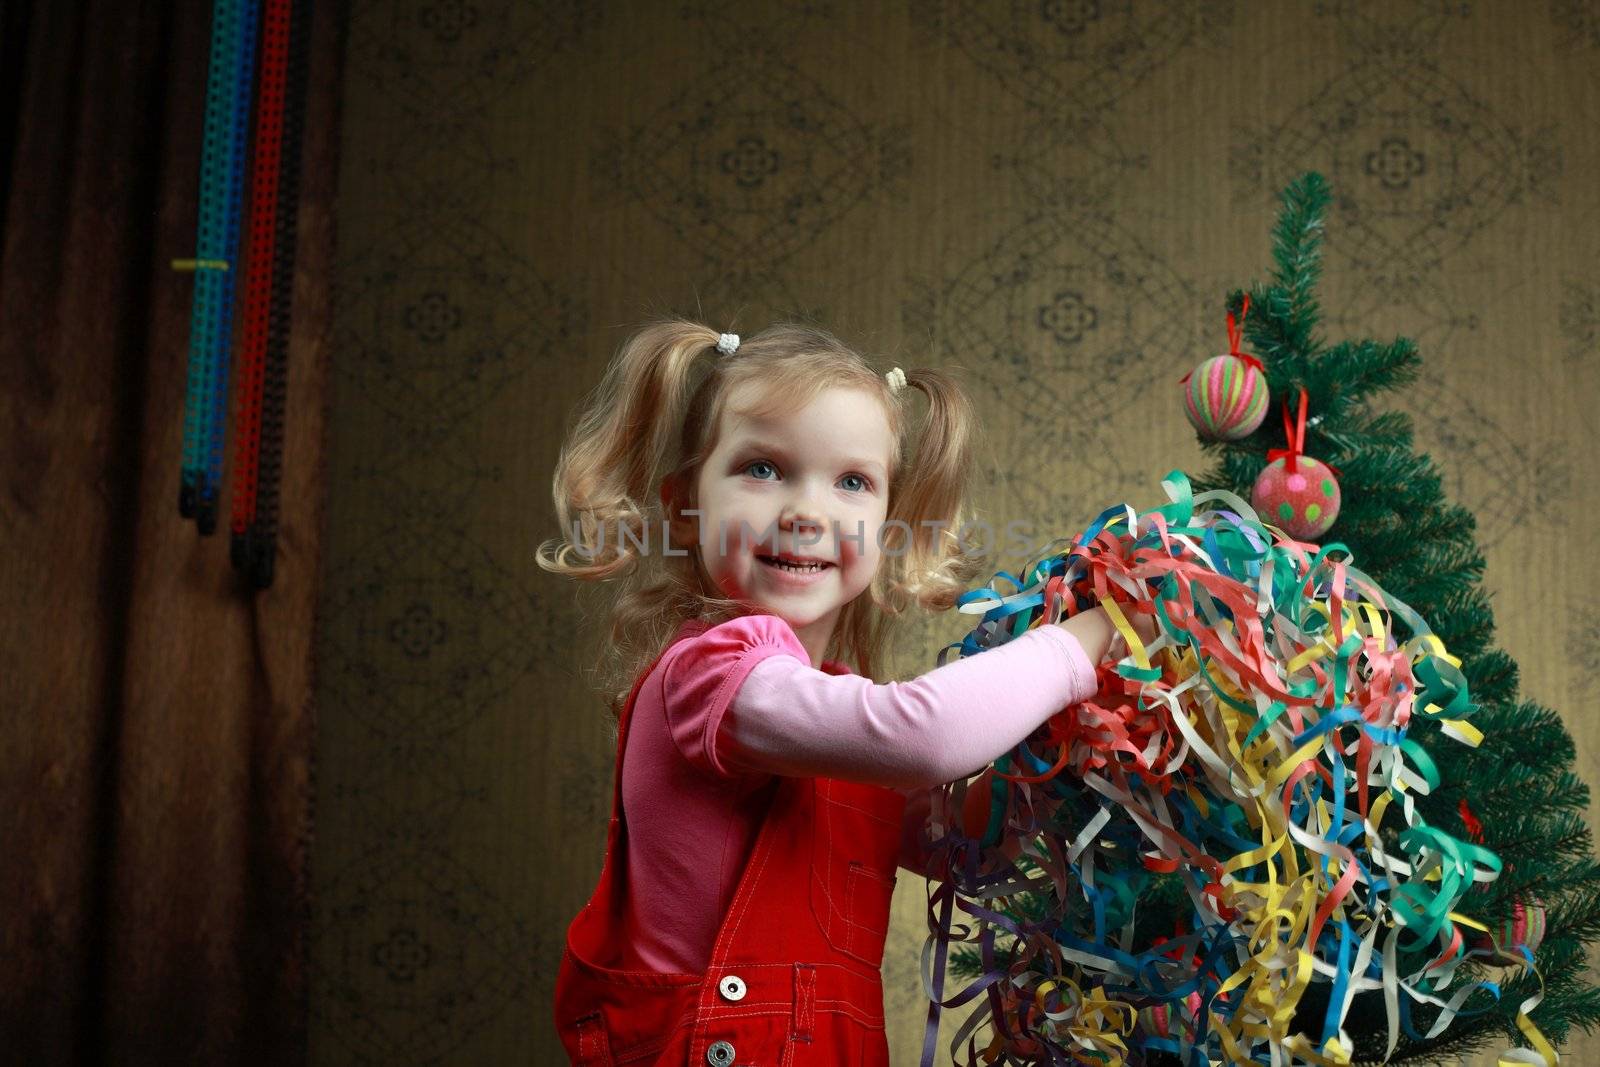 A nice girl jumping at a new year tree